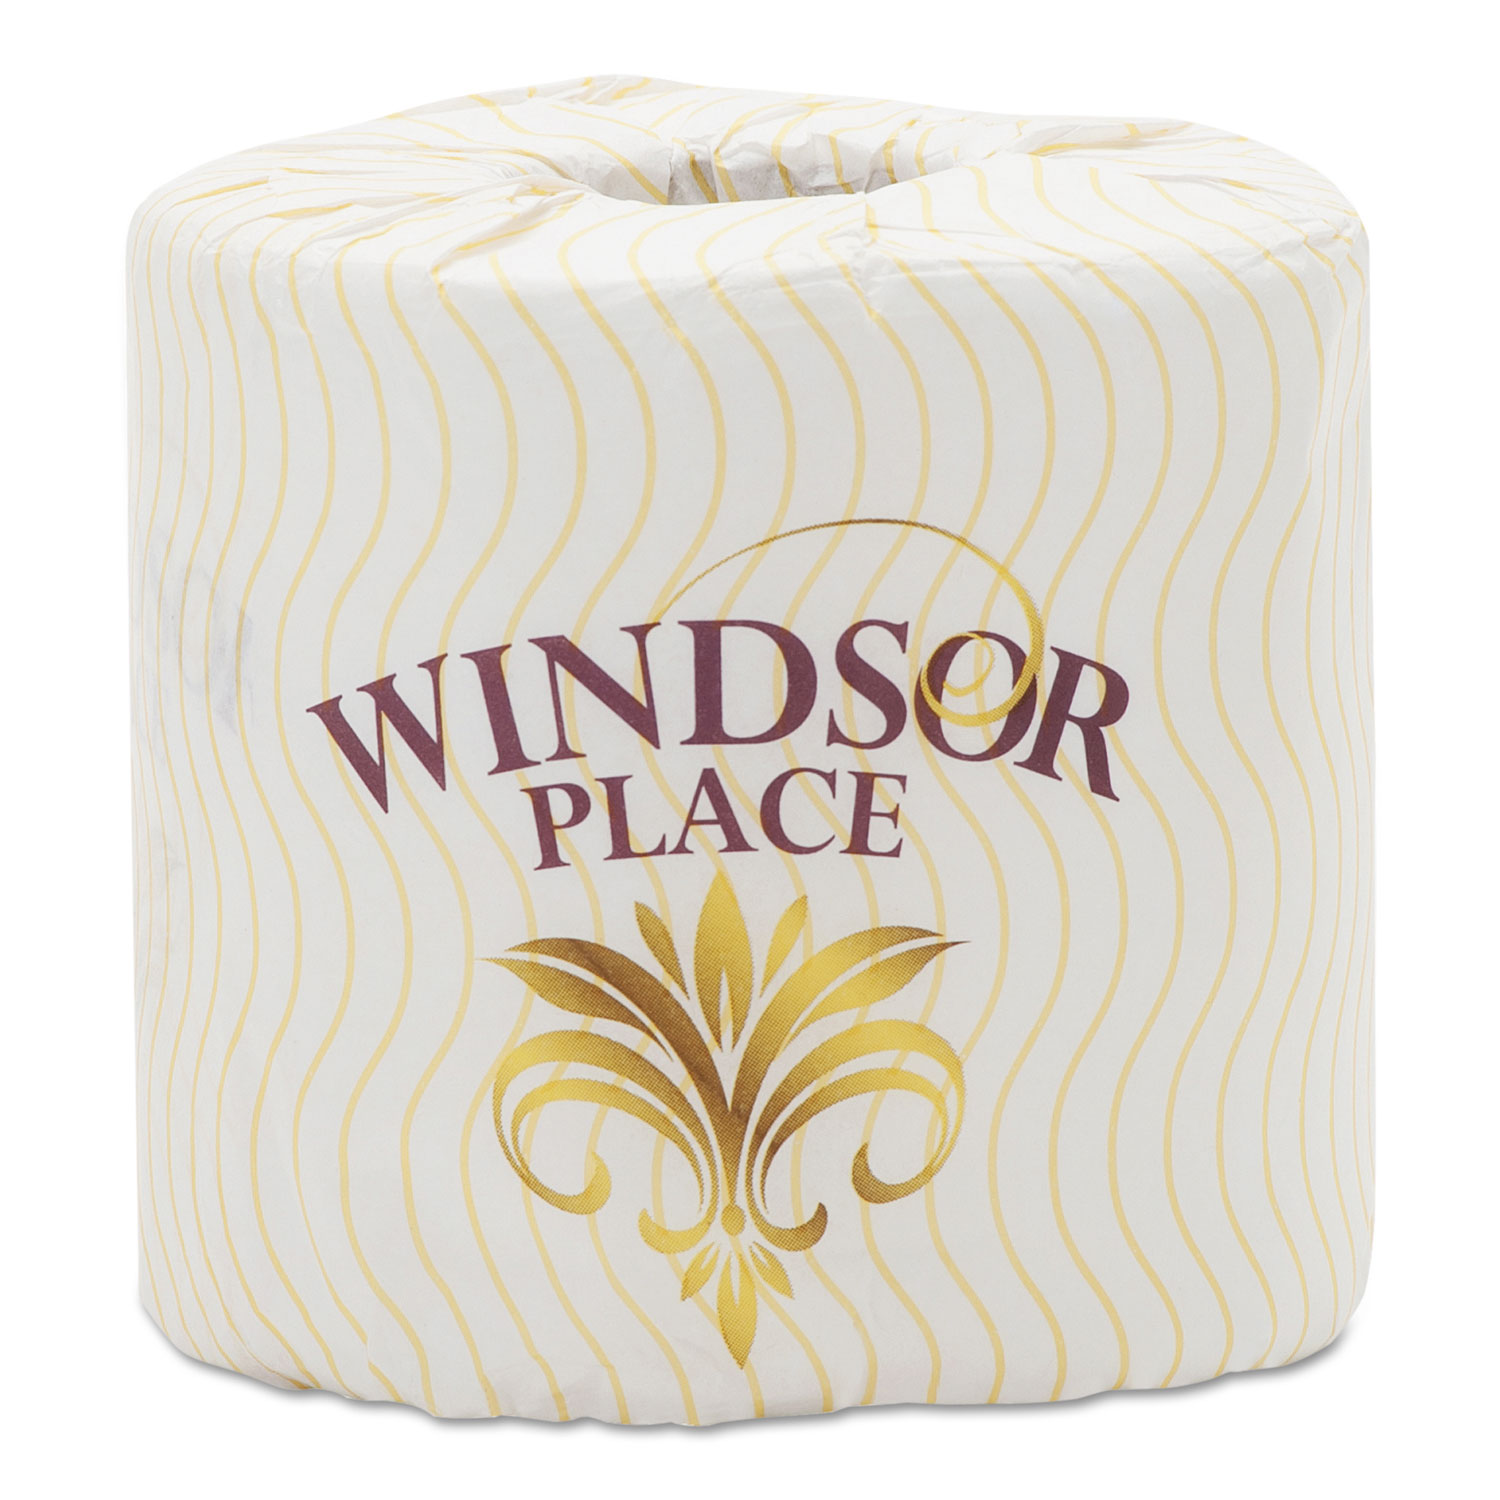 Windsor Place Premium Bathroom Tissue, 2-Ply, 4.5 x 3.5, 500/Roll